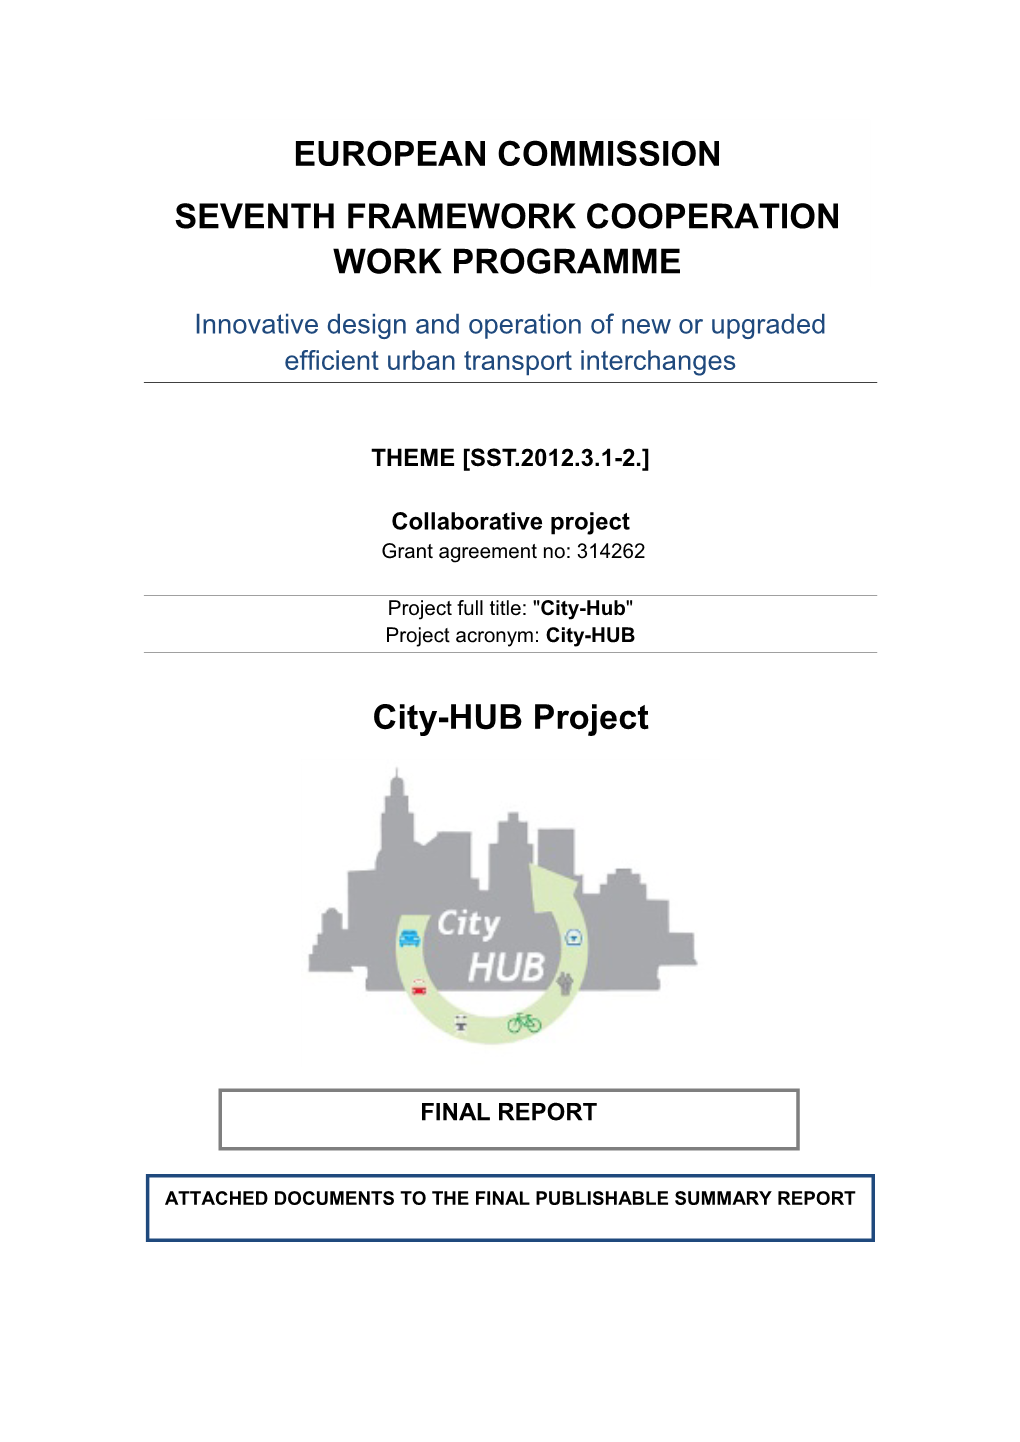 City-Hub" Project Acronym: City-HUB